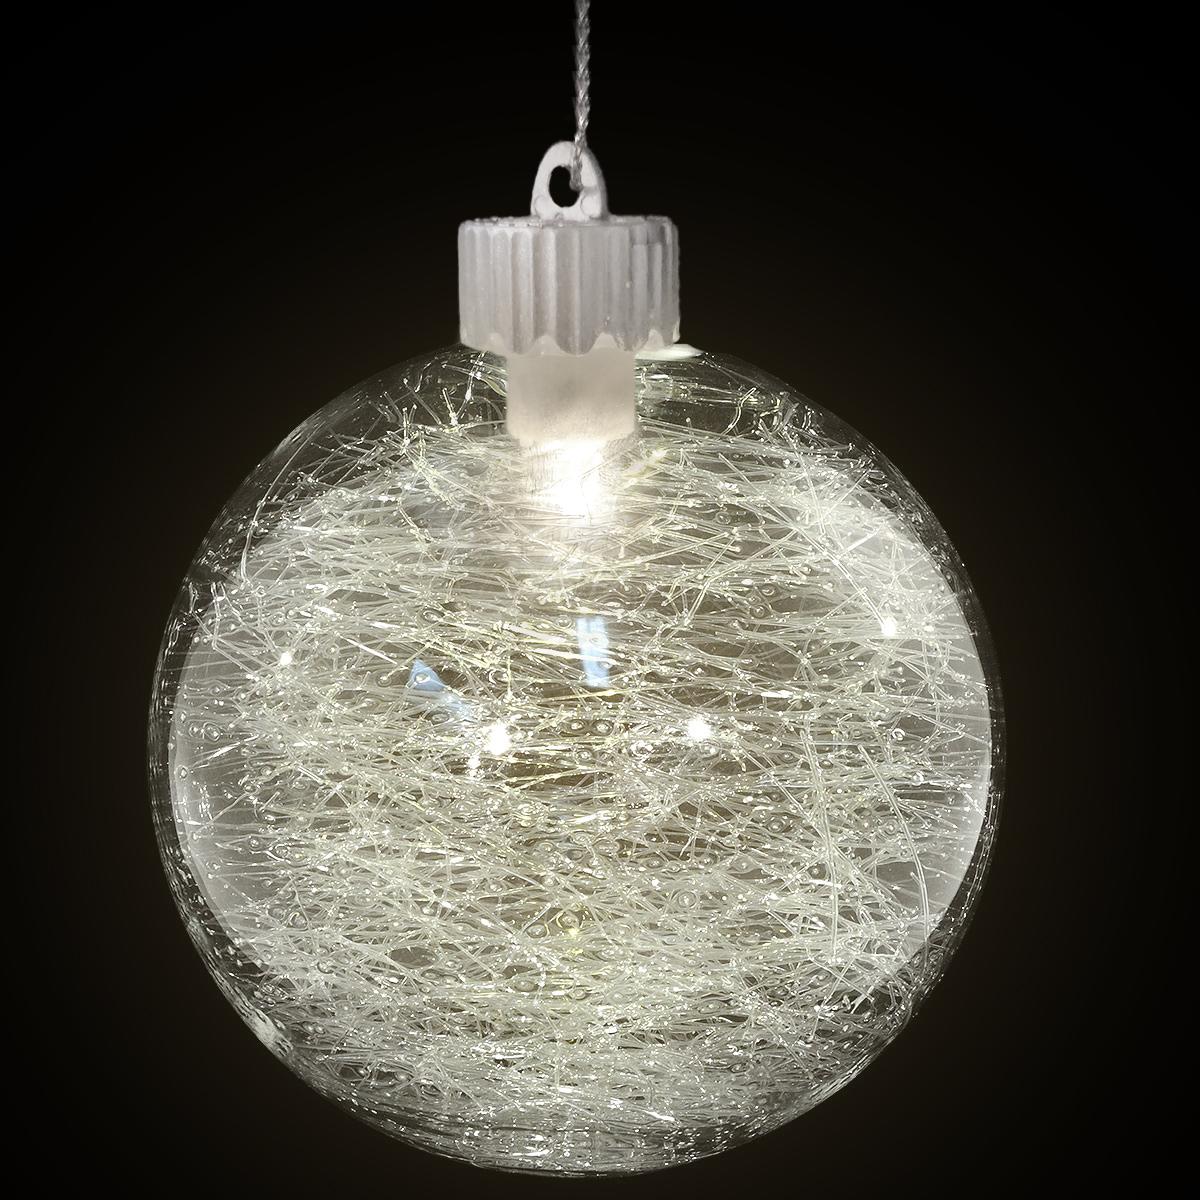 LED Lighted Glass Ornament